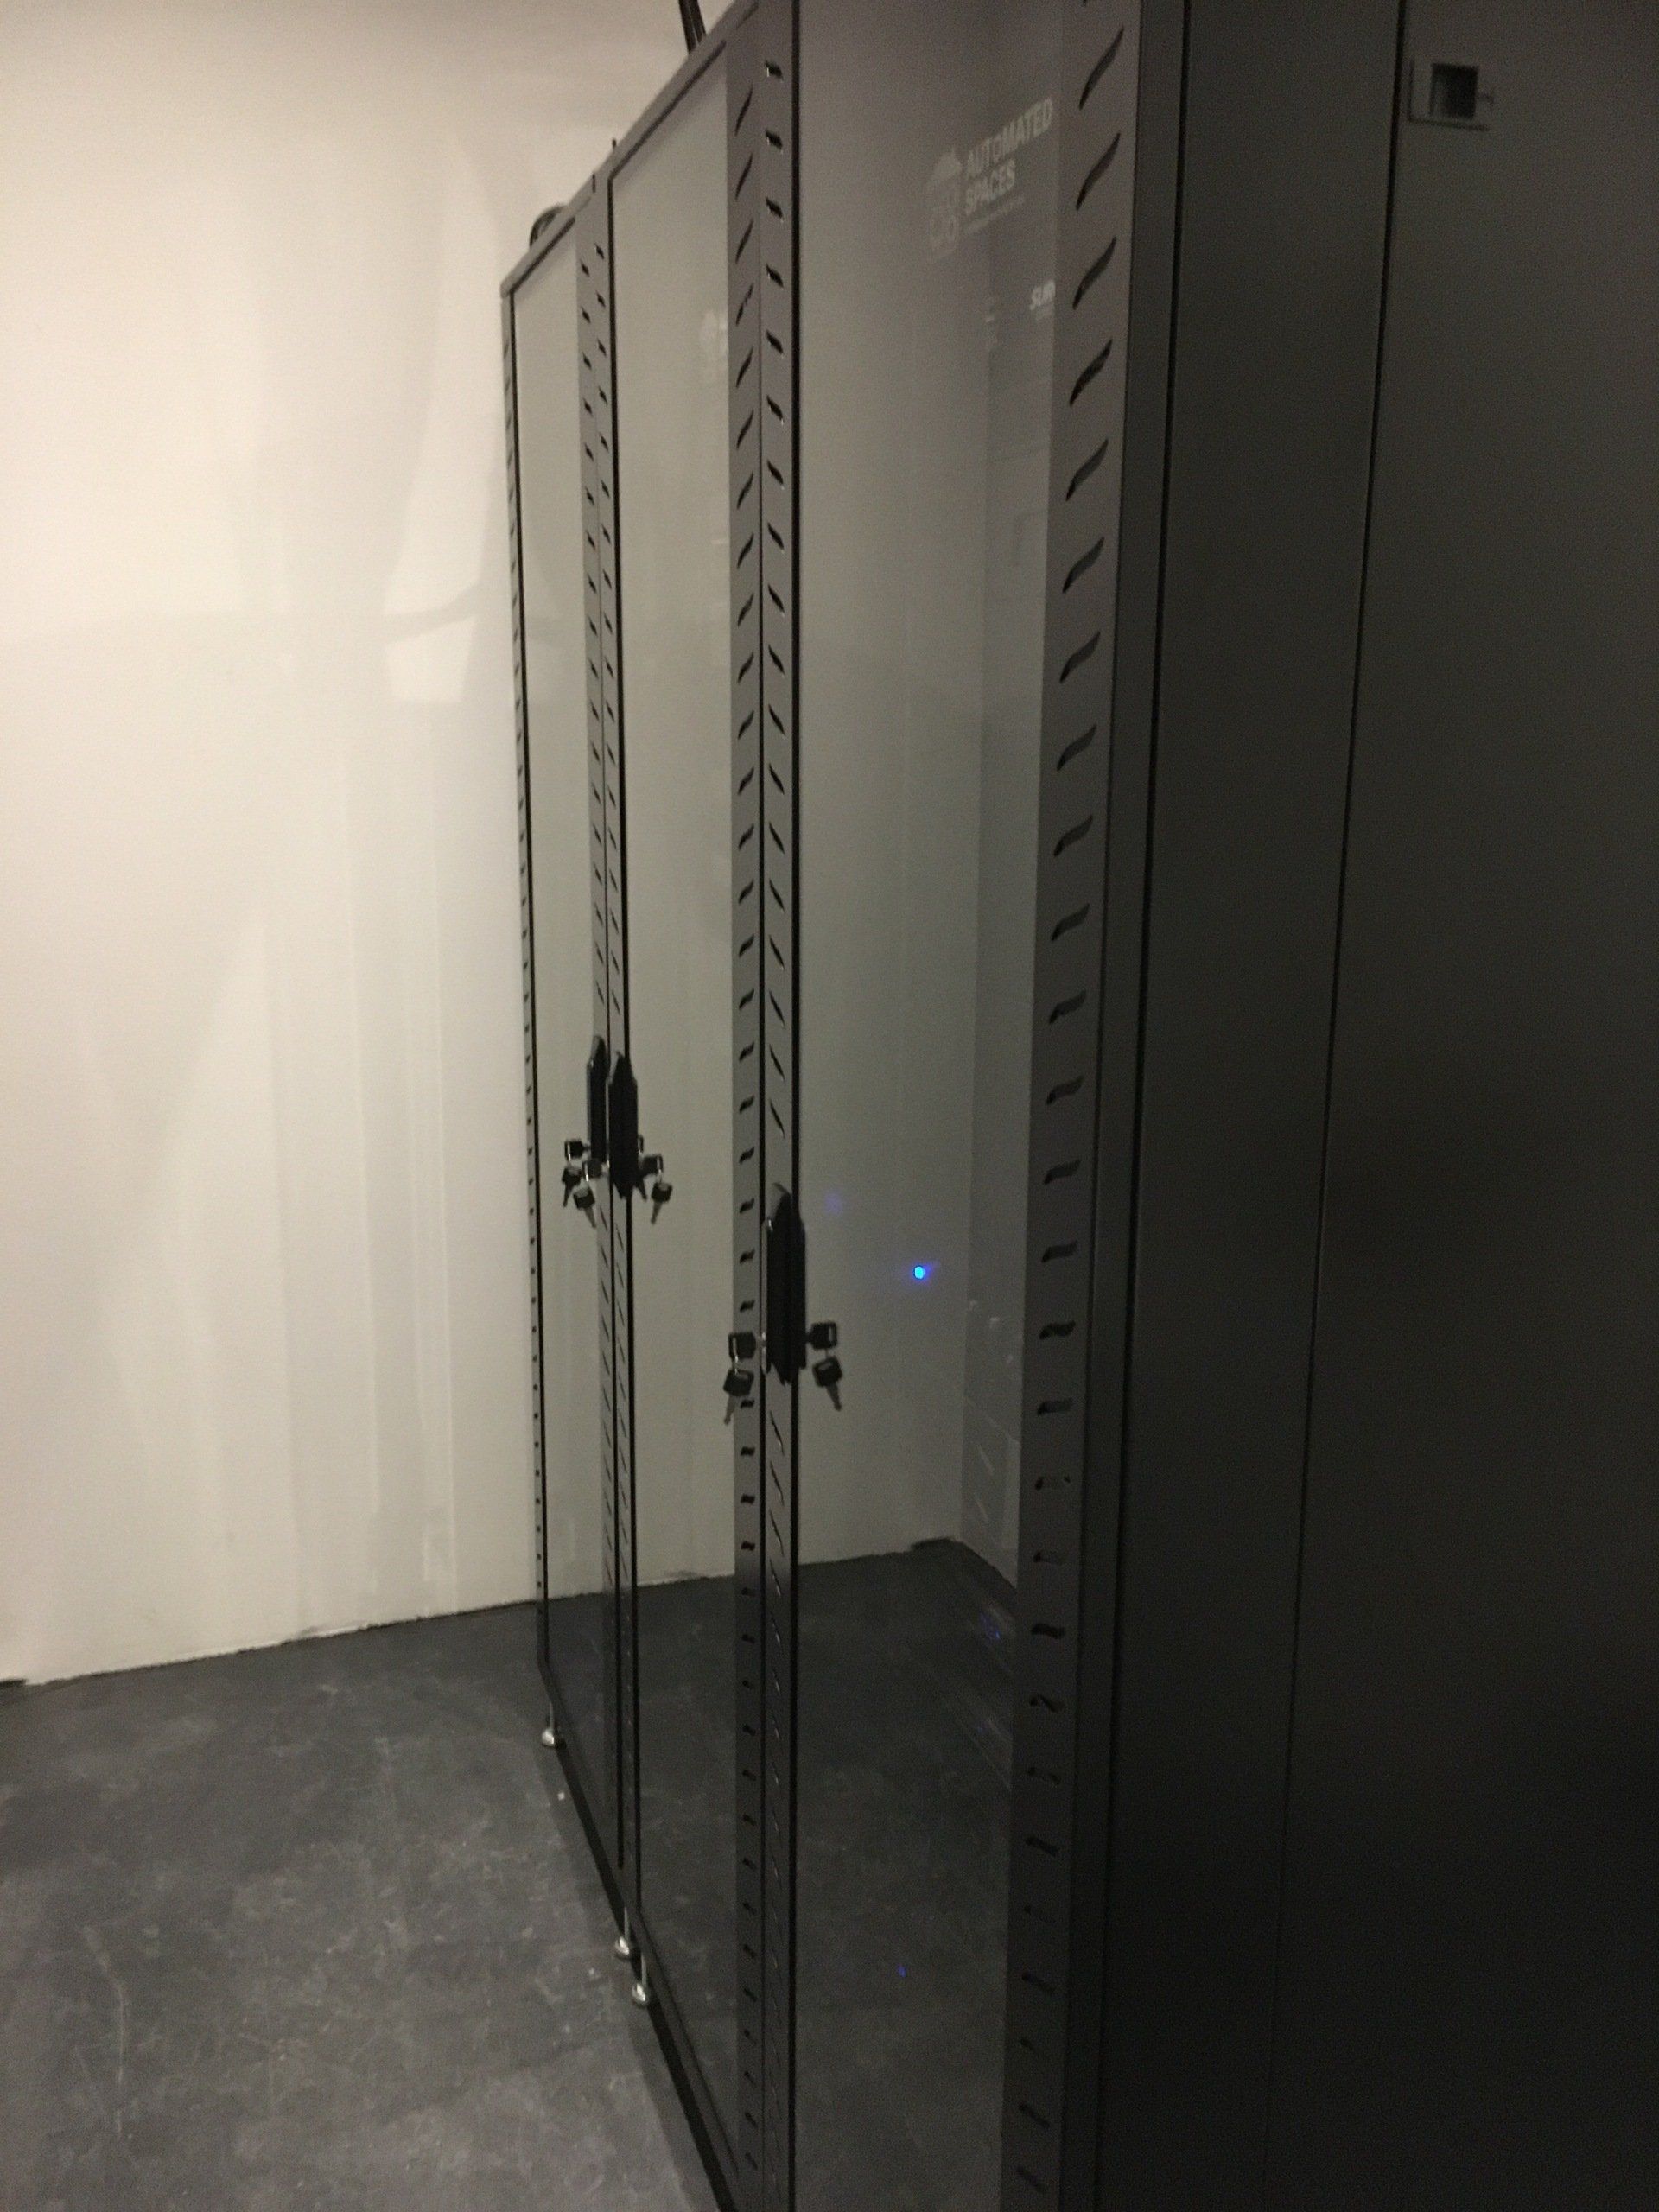 Photograph of front of 3 x 42U server racks